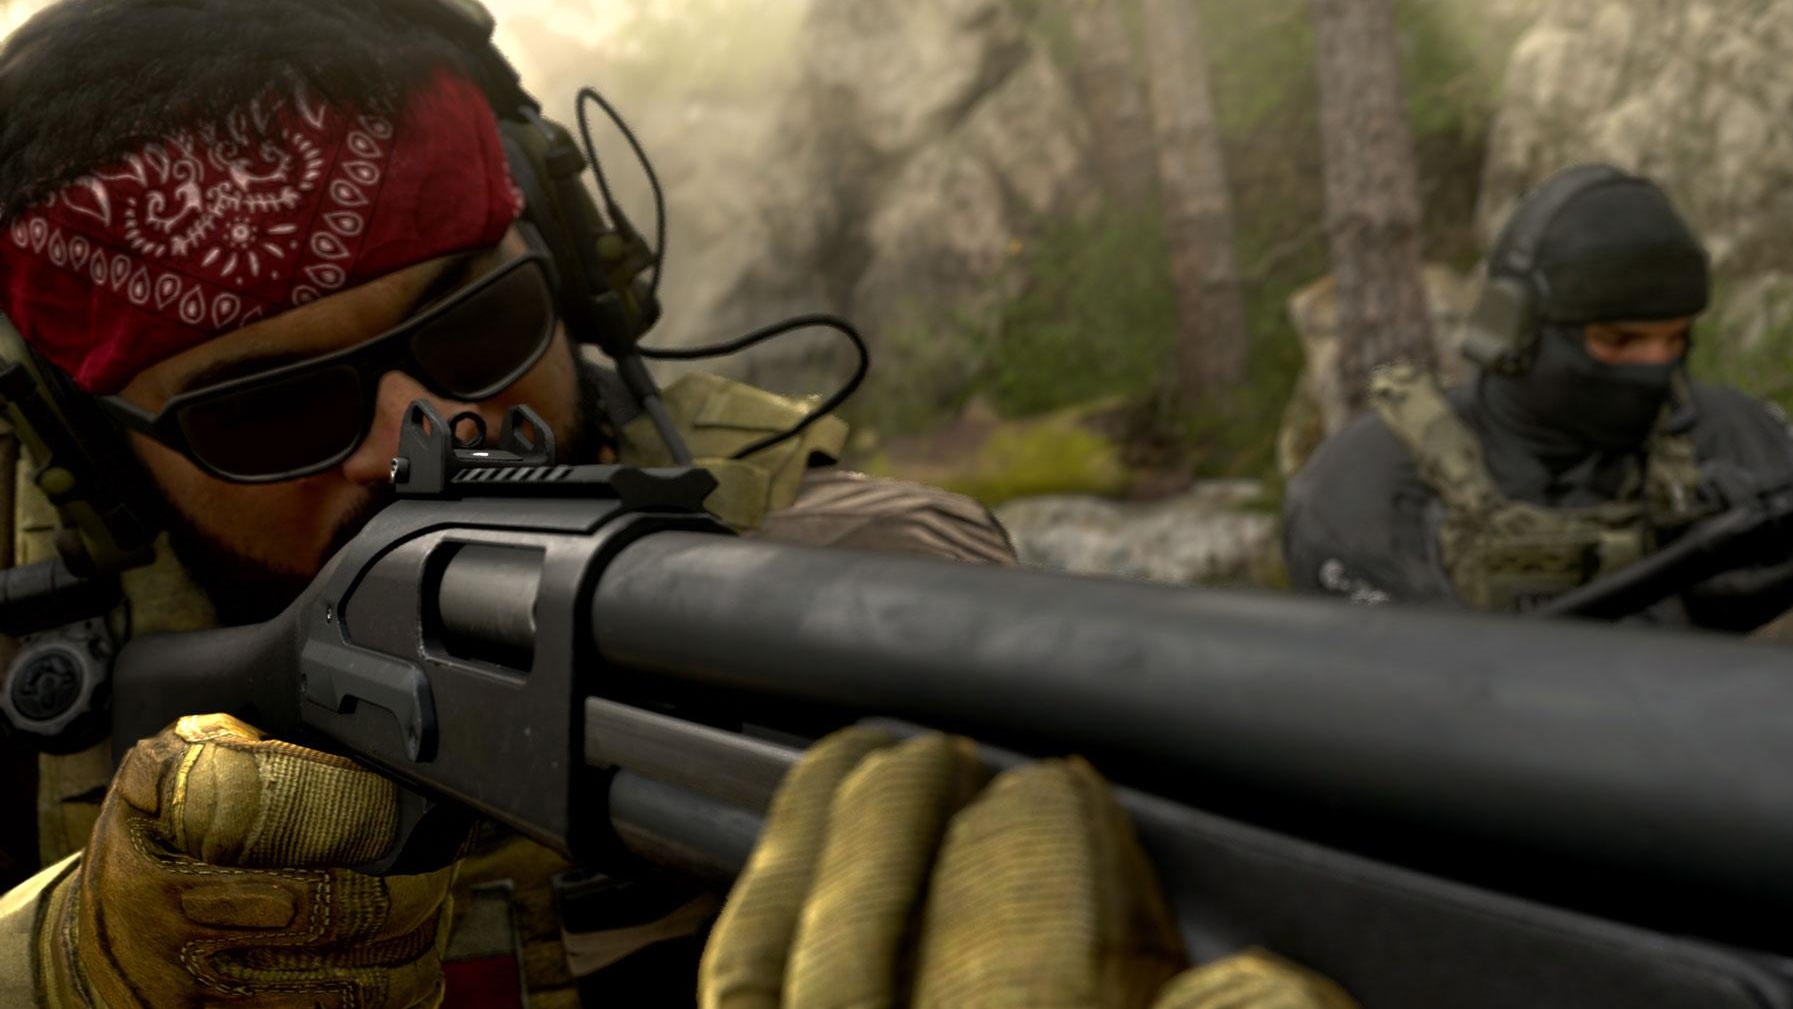 Call of Duty pokročilé vojny zručnosť na základe dohazování